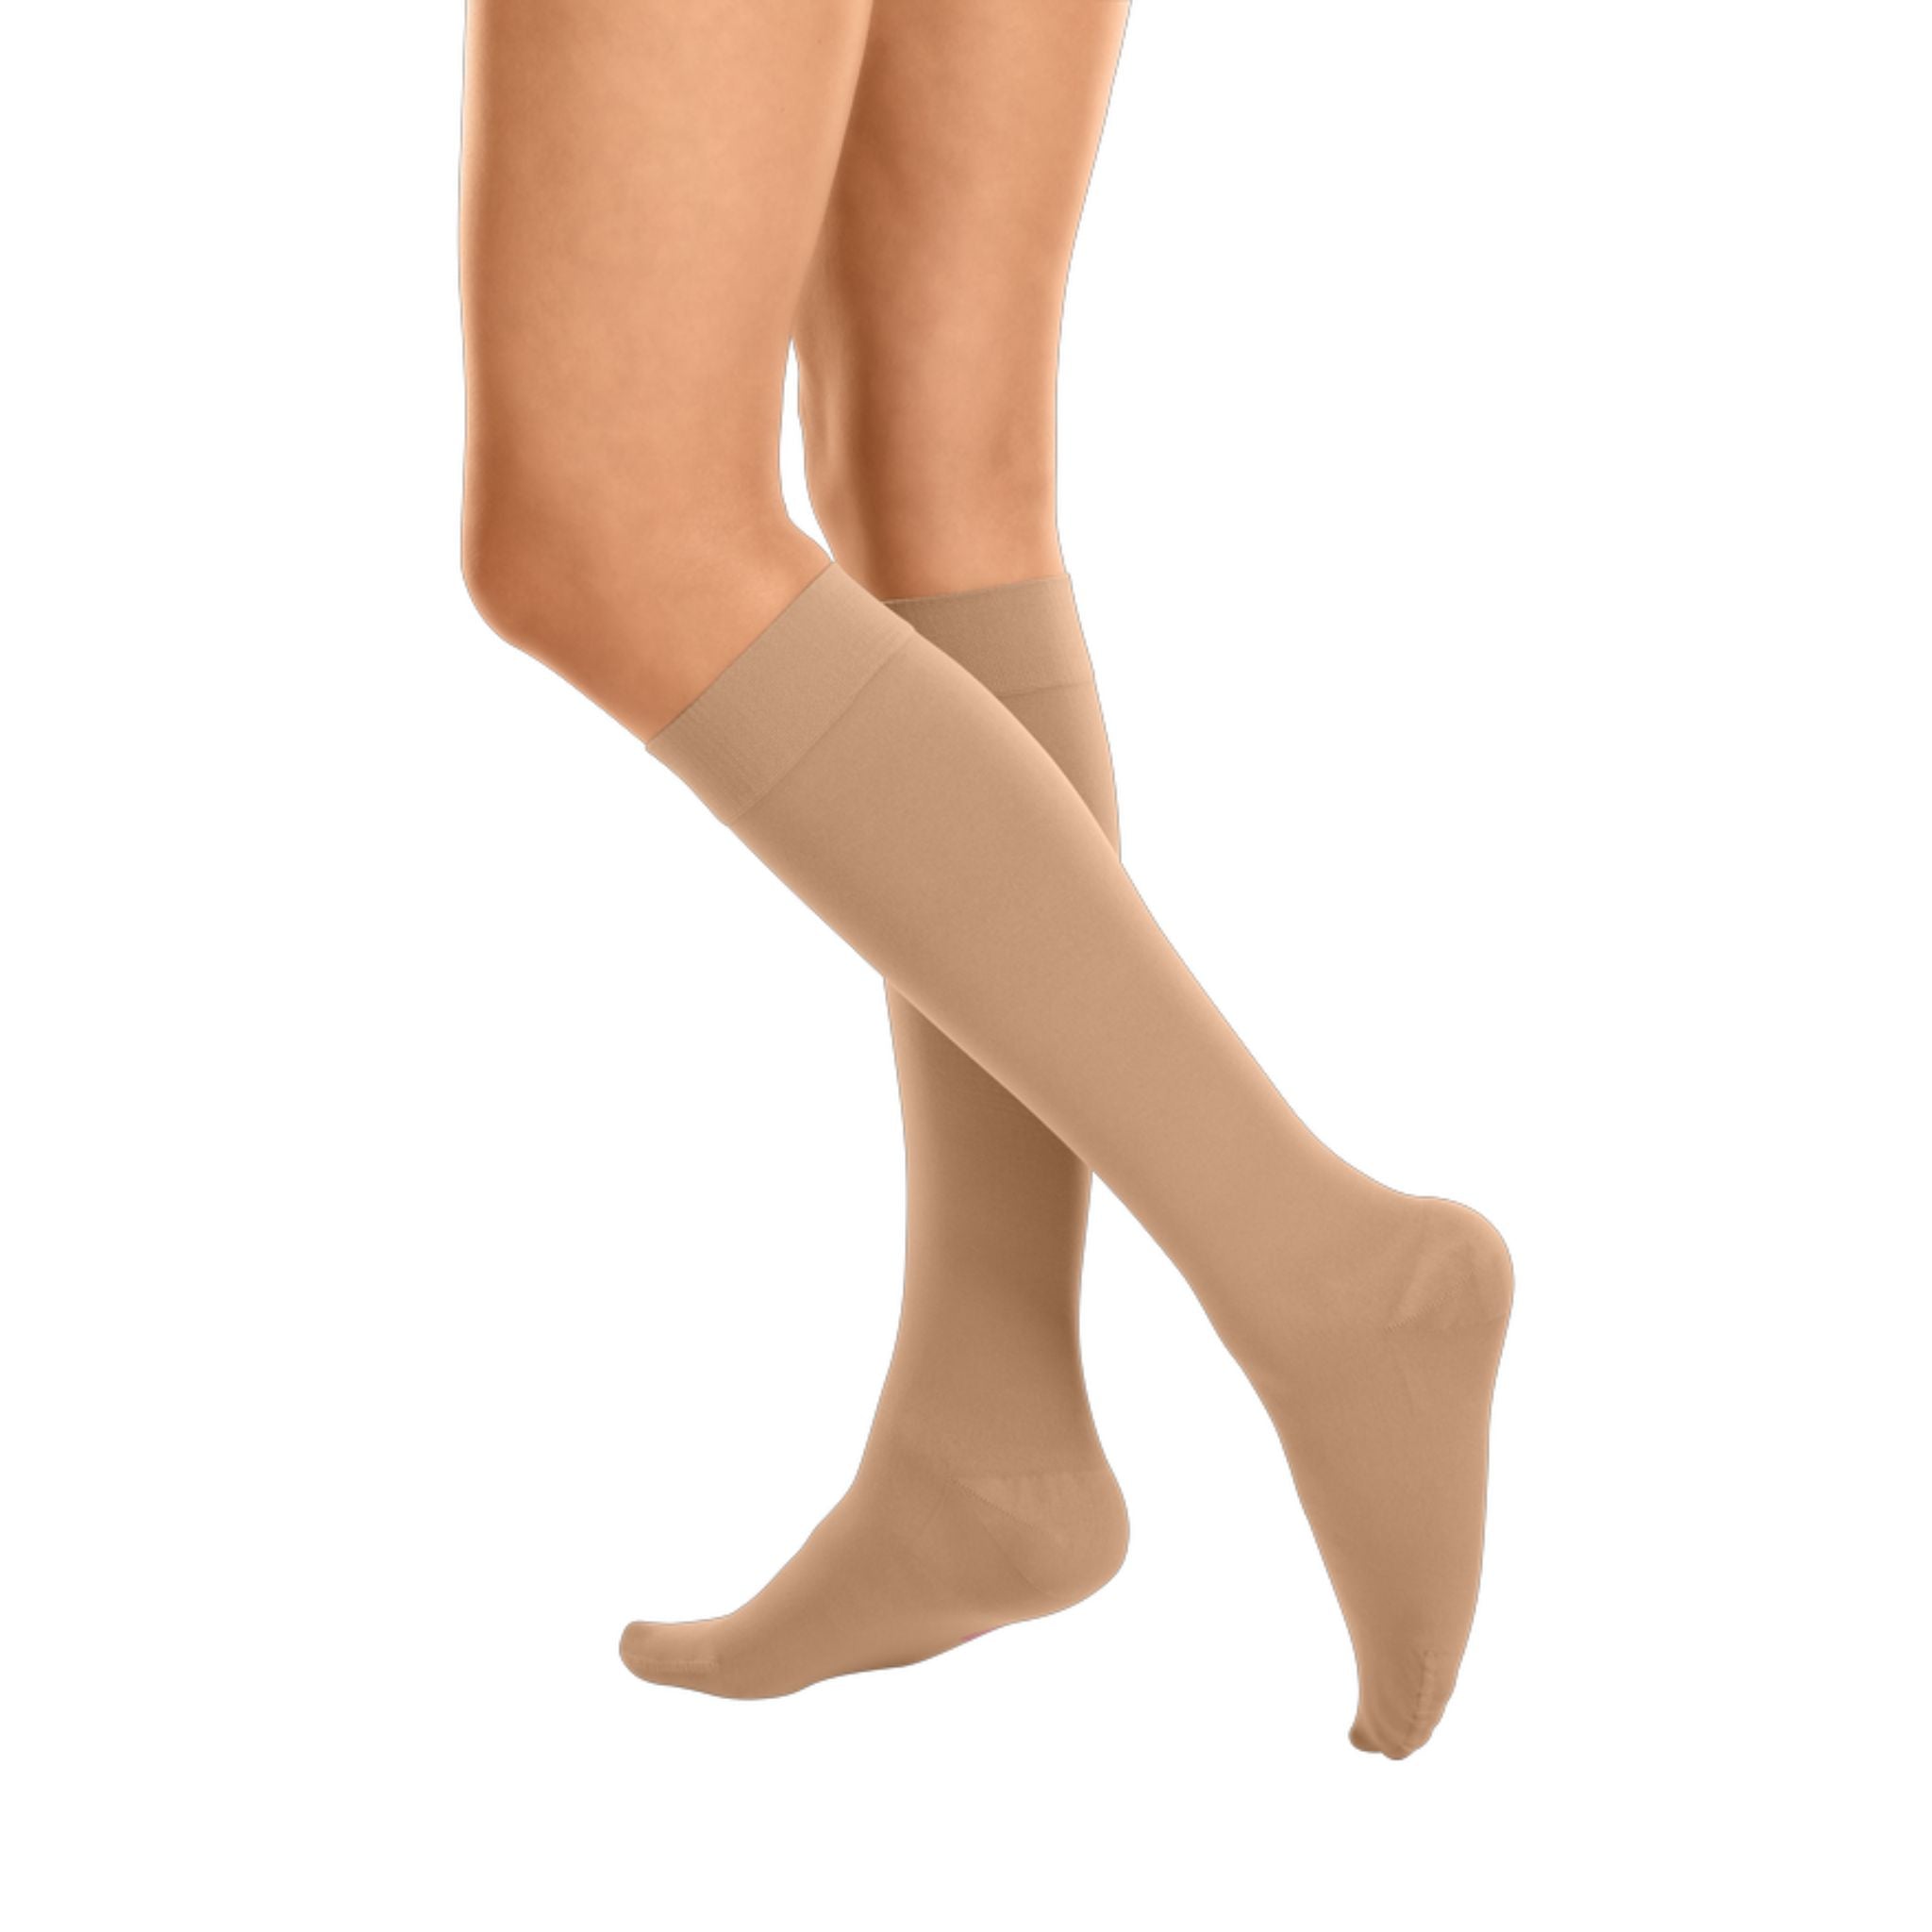 Compression Stockings  Below Knee  Open Toe  Caramel  mediven cotton